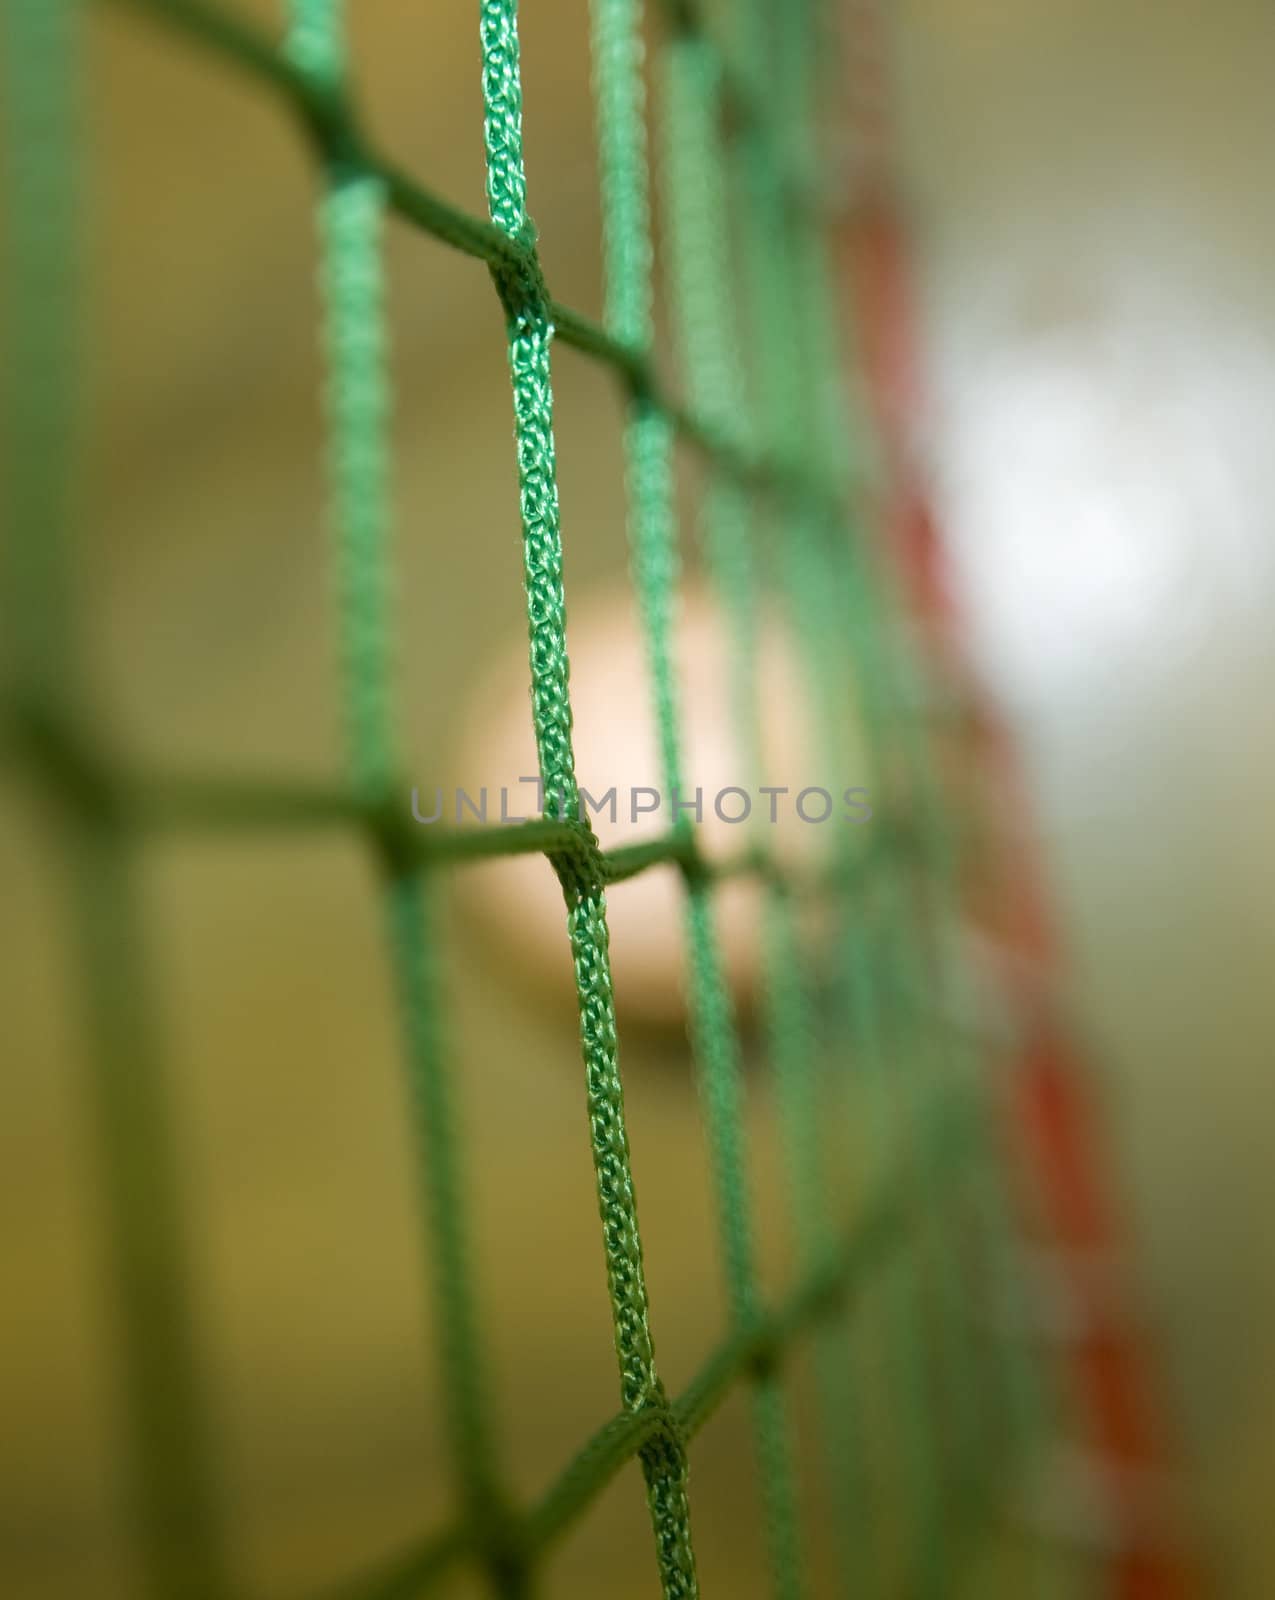 Close up of a net detail